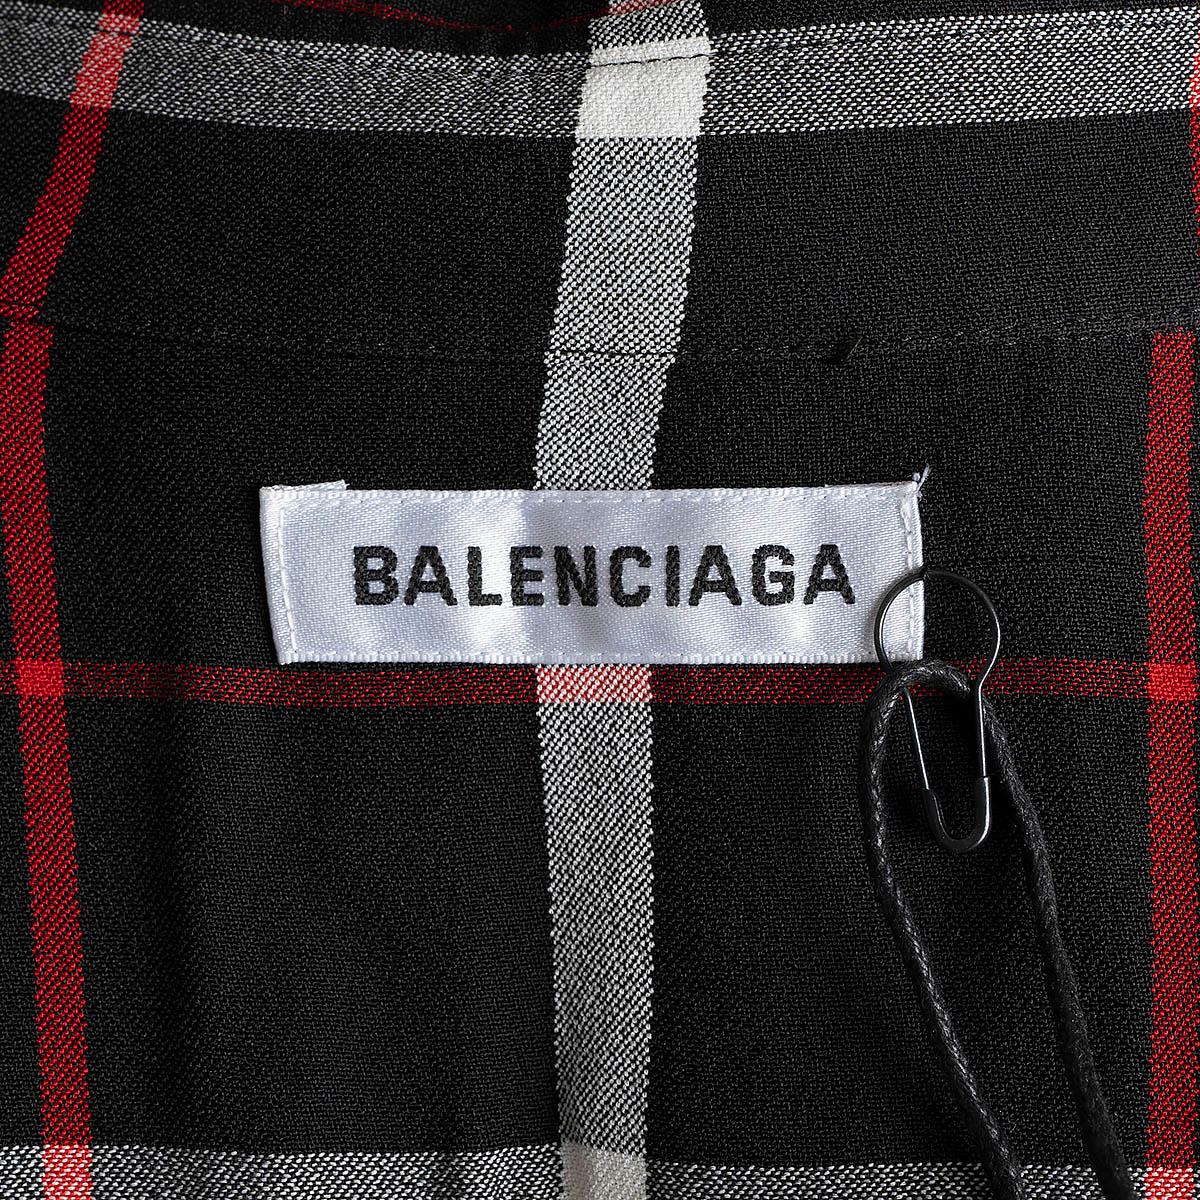 BALENCIAGA black red white viscose 2019 LOGO PLAID Button-Up Shirt 40 M For Sale 2